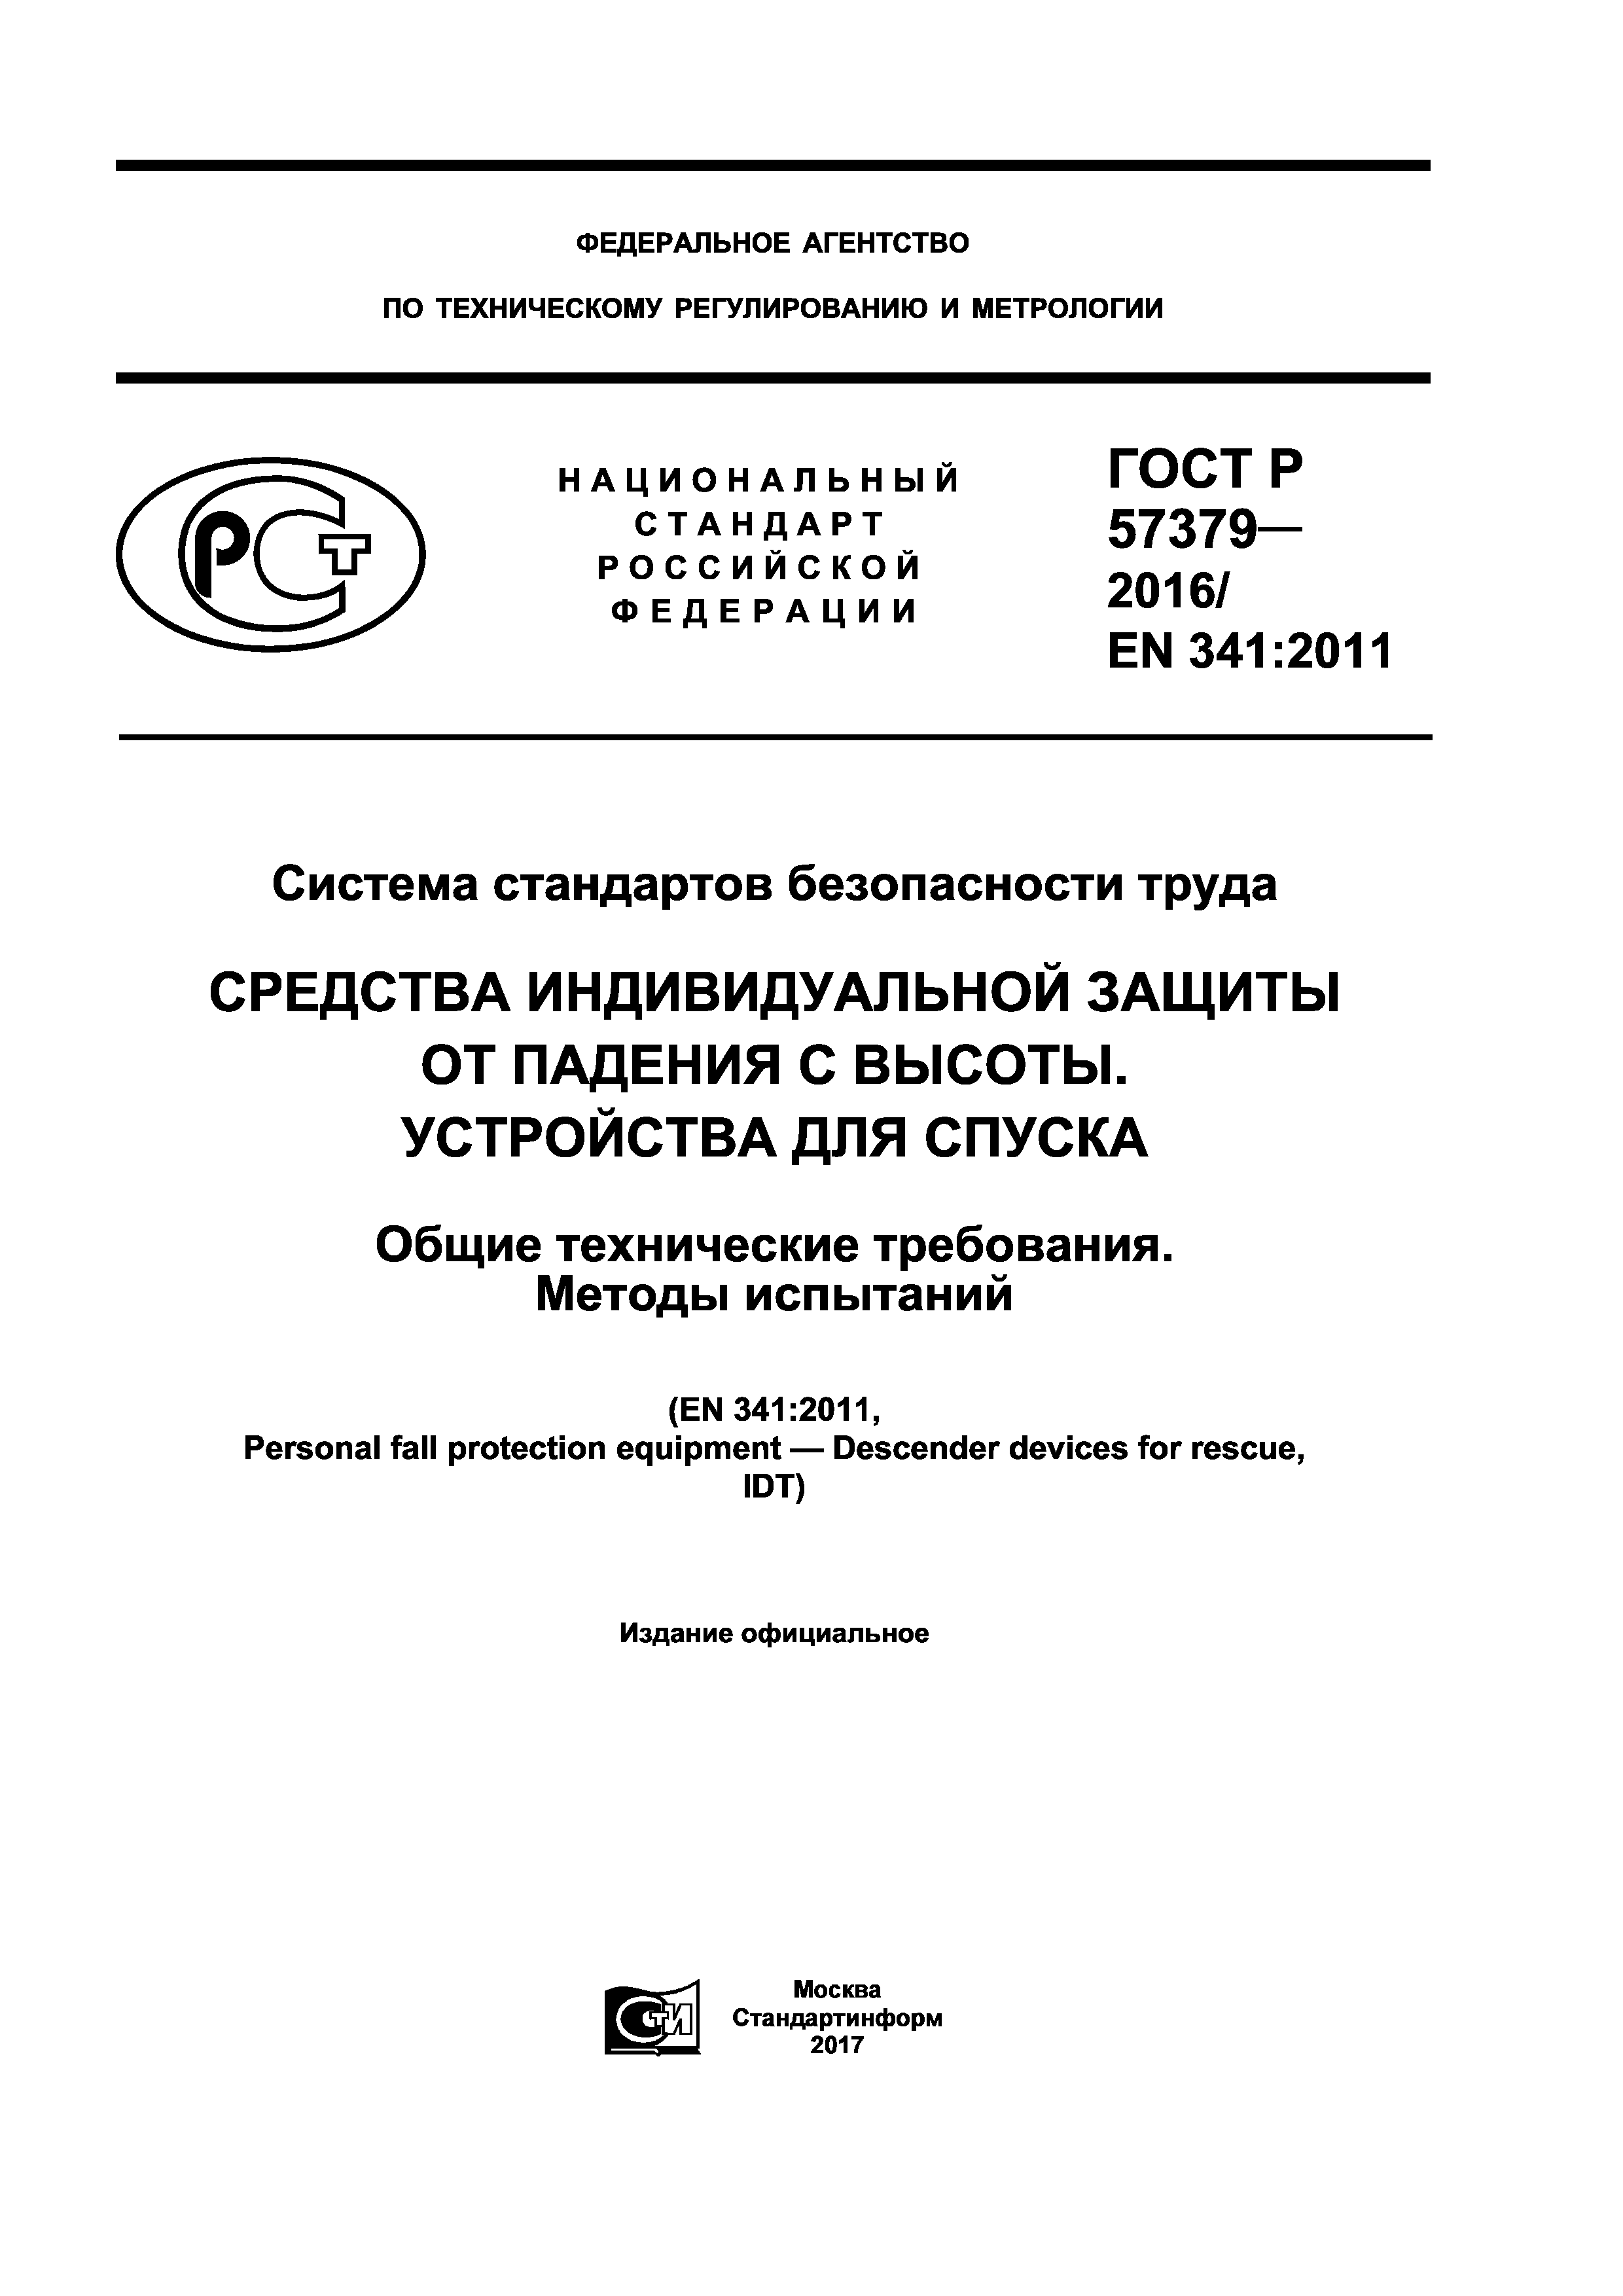 ГОСТ Р 57379-2016